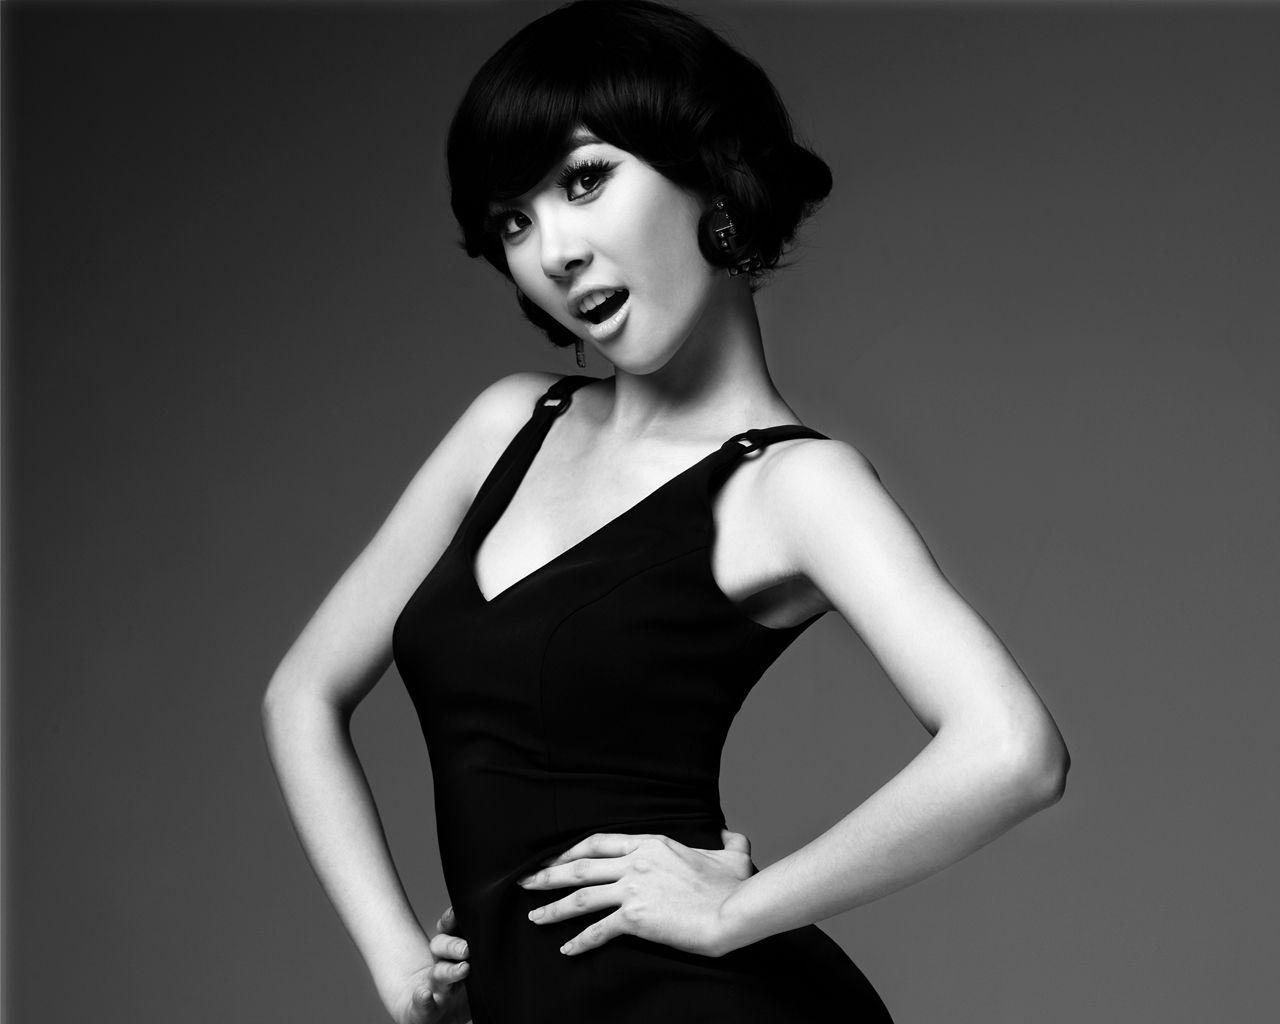 Ex Wonder Girls Member Sunmi Drops Hints About Potential Comeback